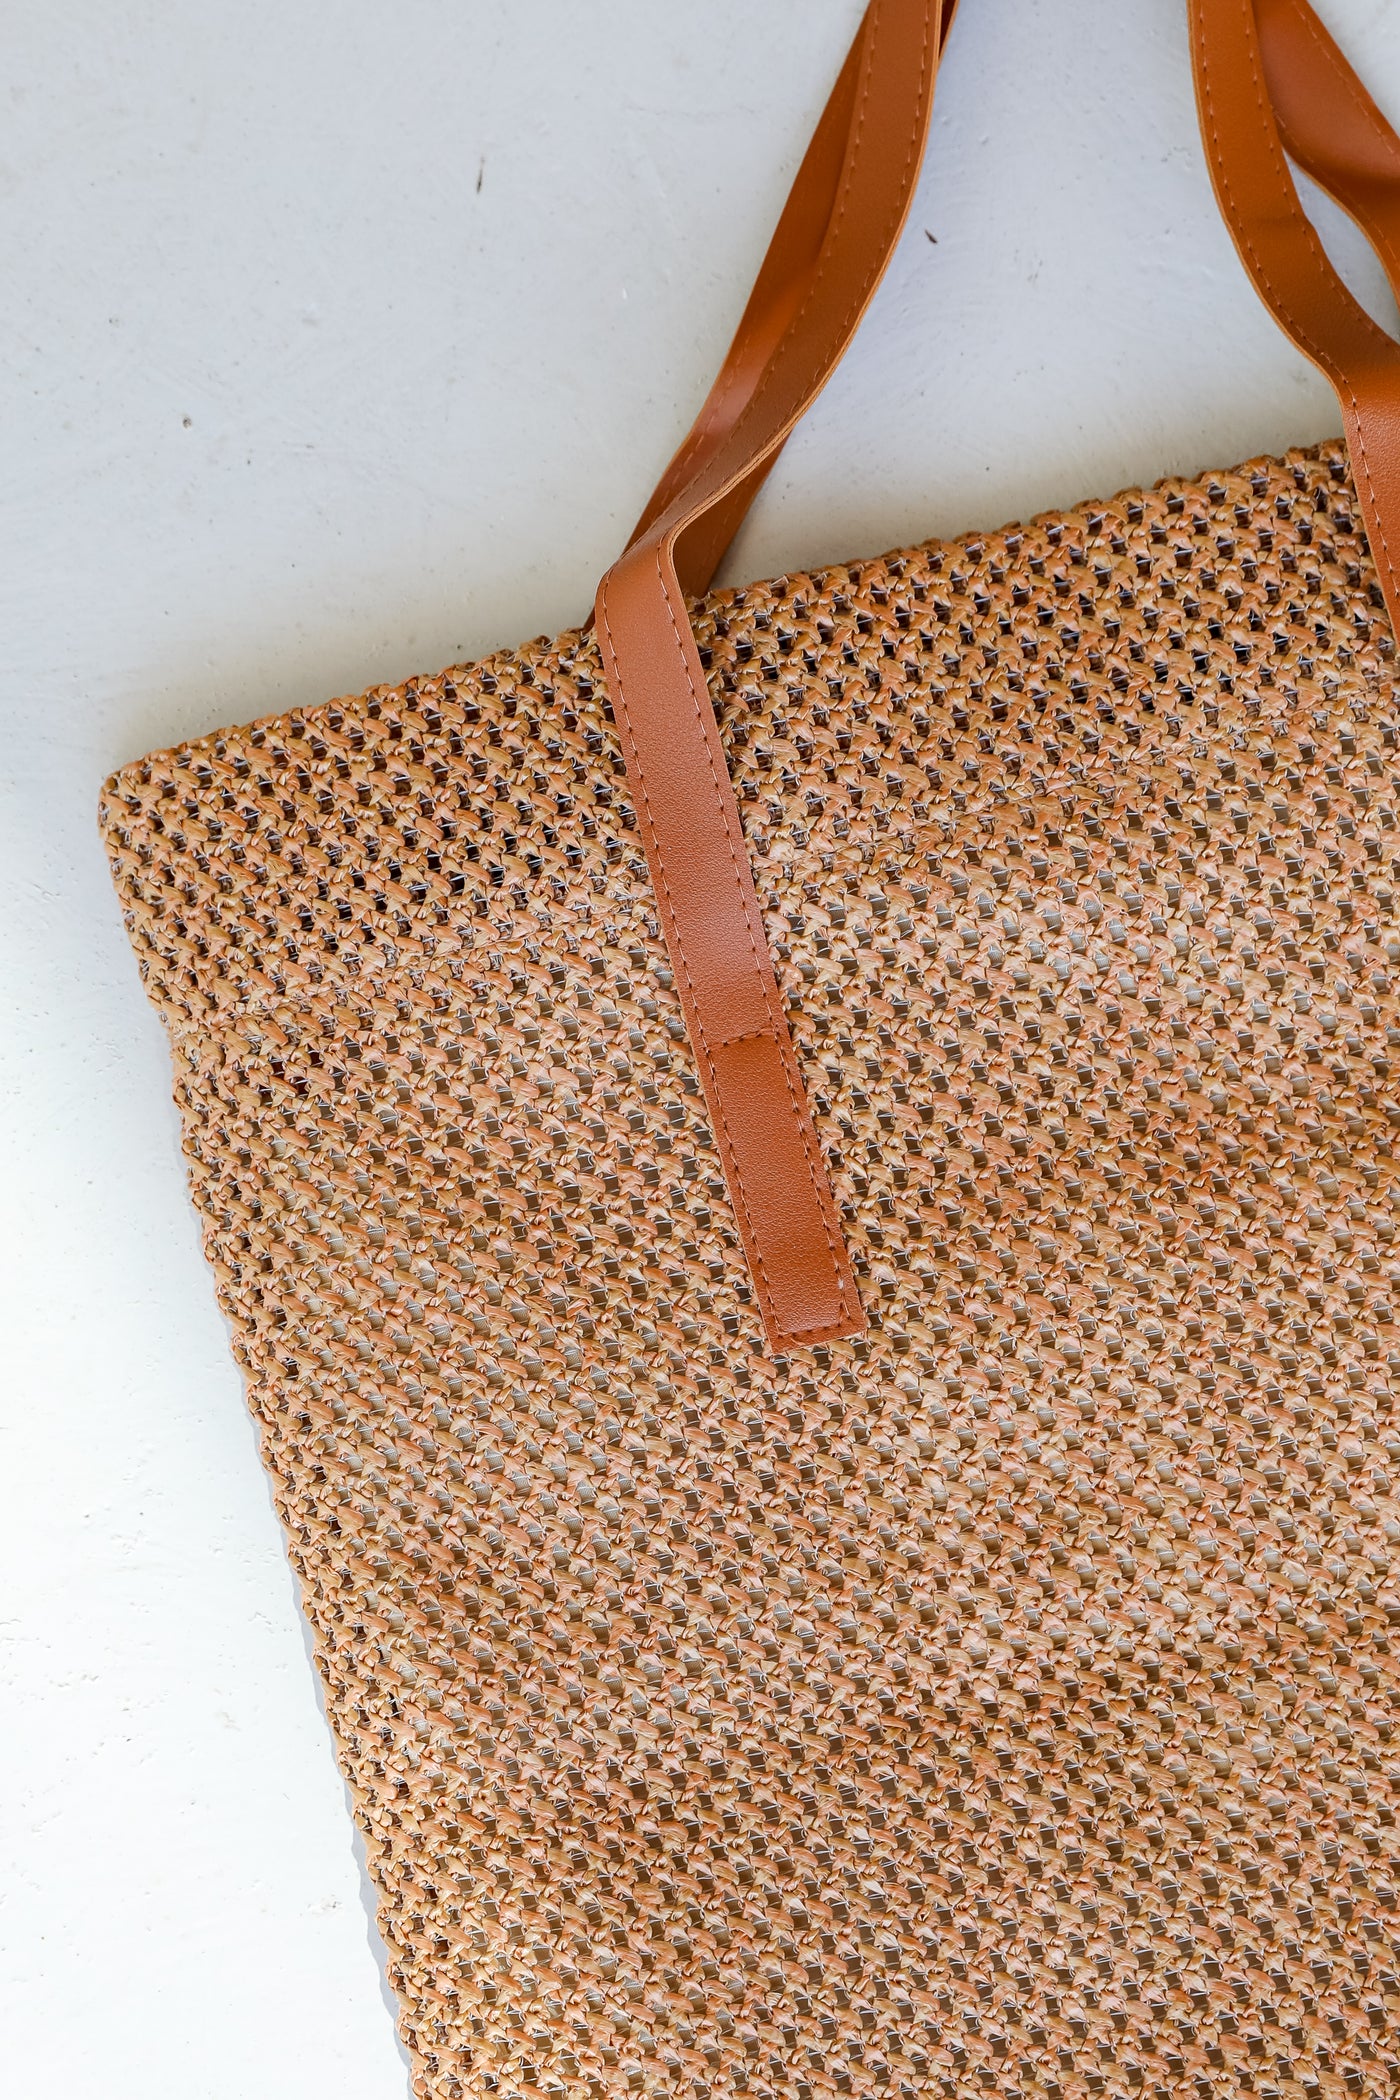 tan Straw Tote Bag close up view